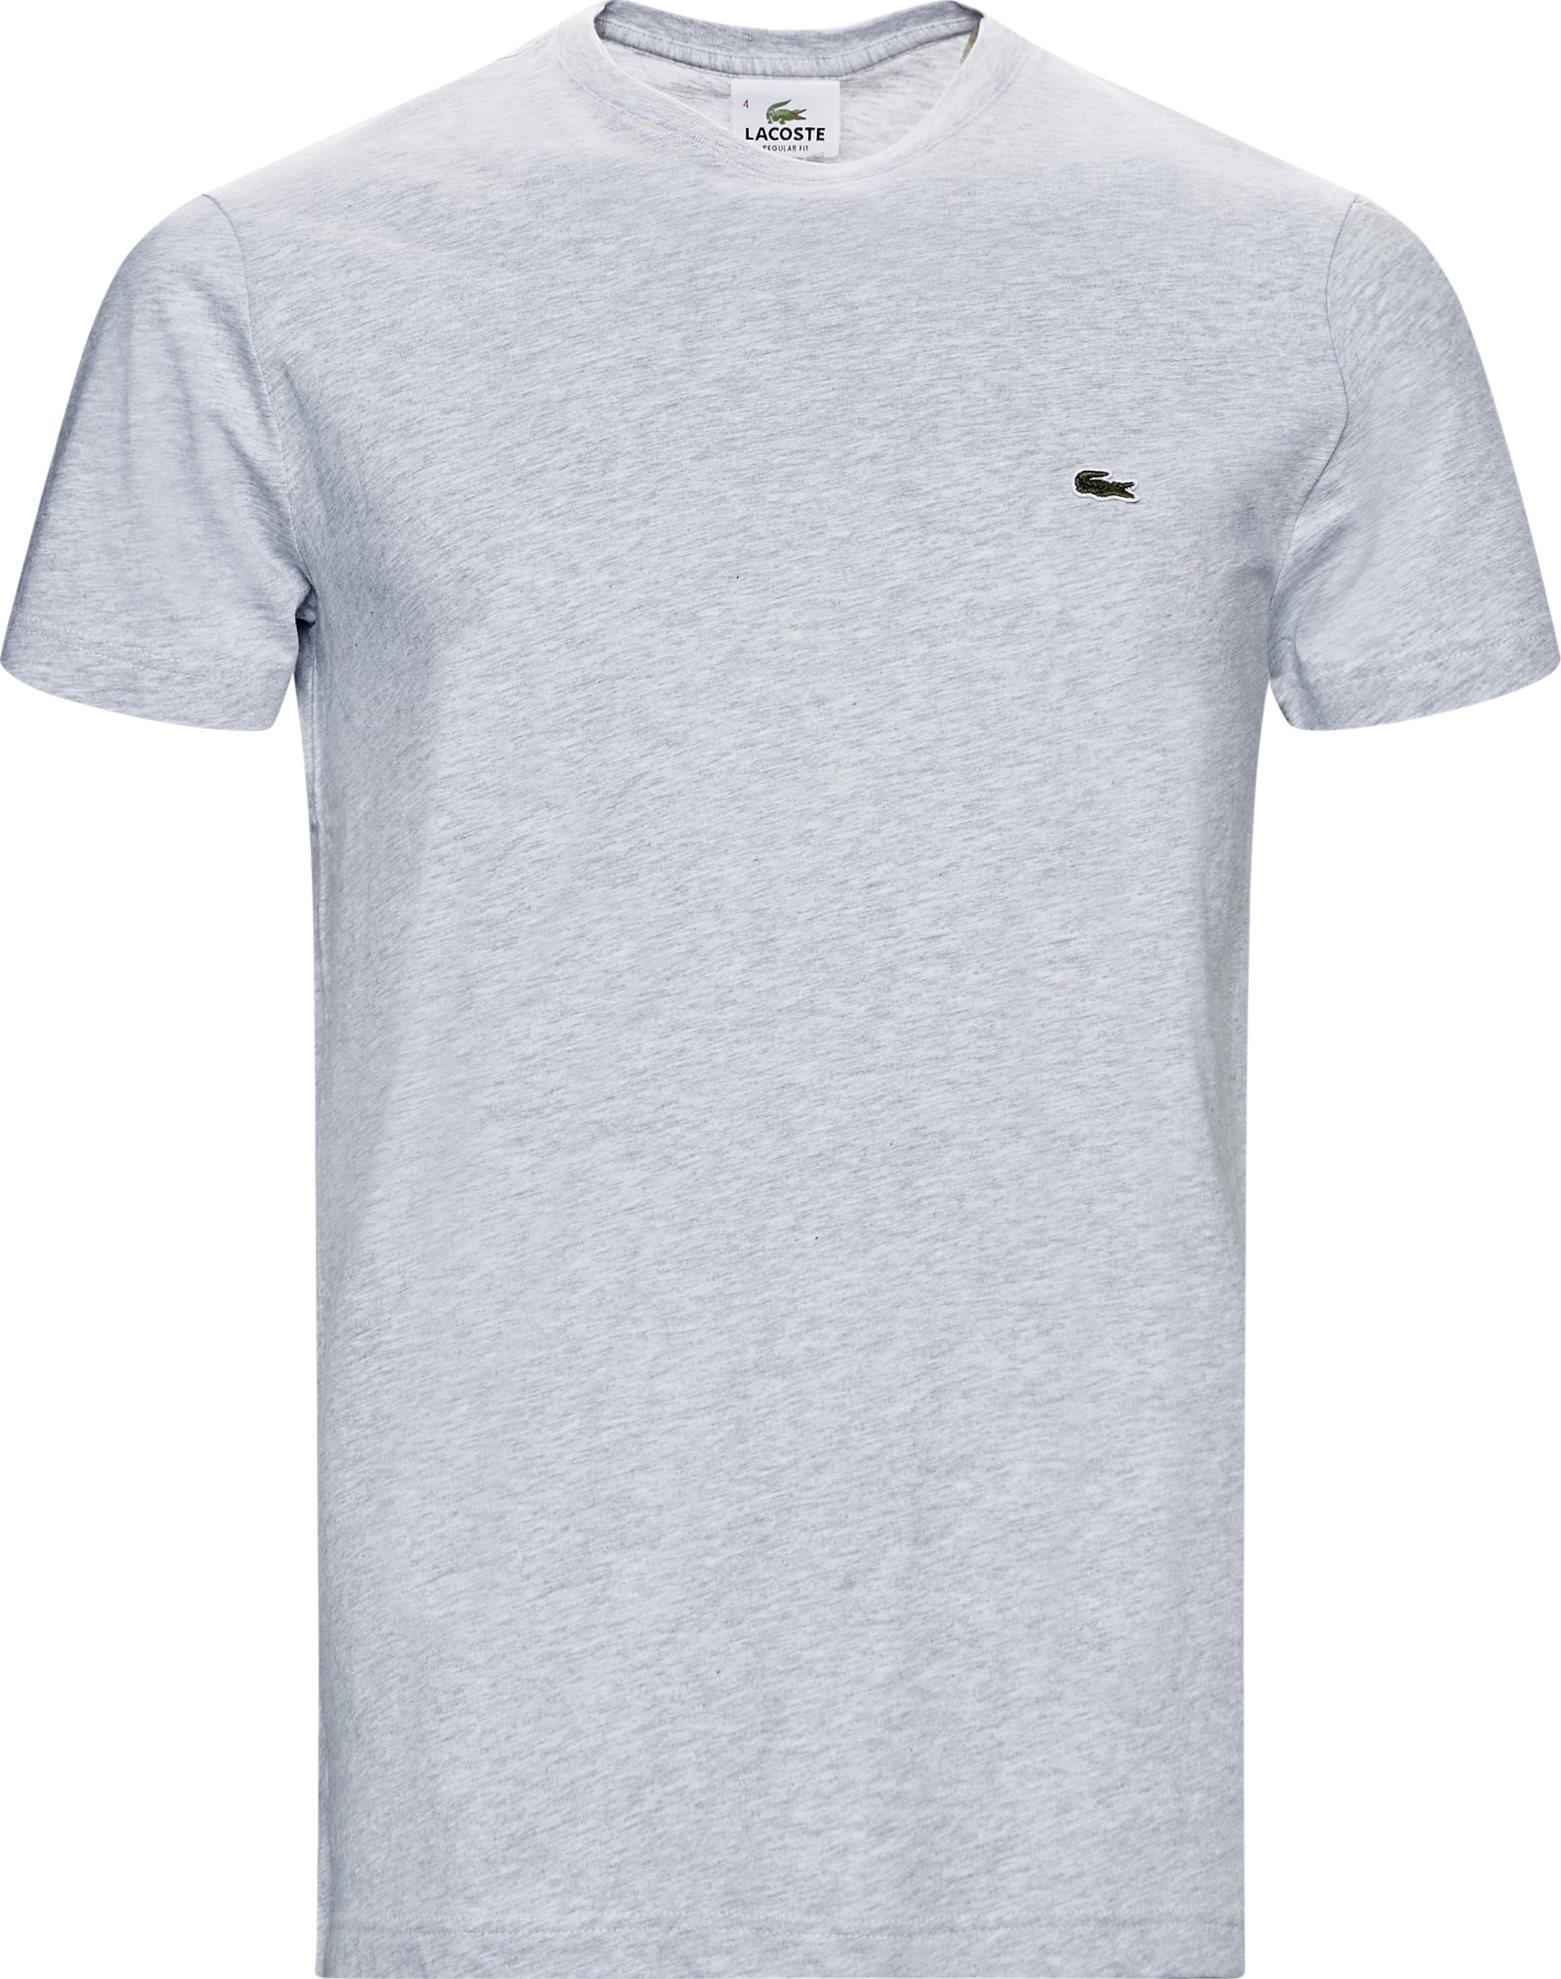 TH2038 - T-shirts - Regular fit - Grå